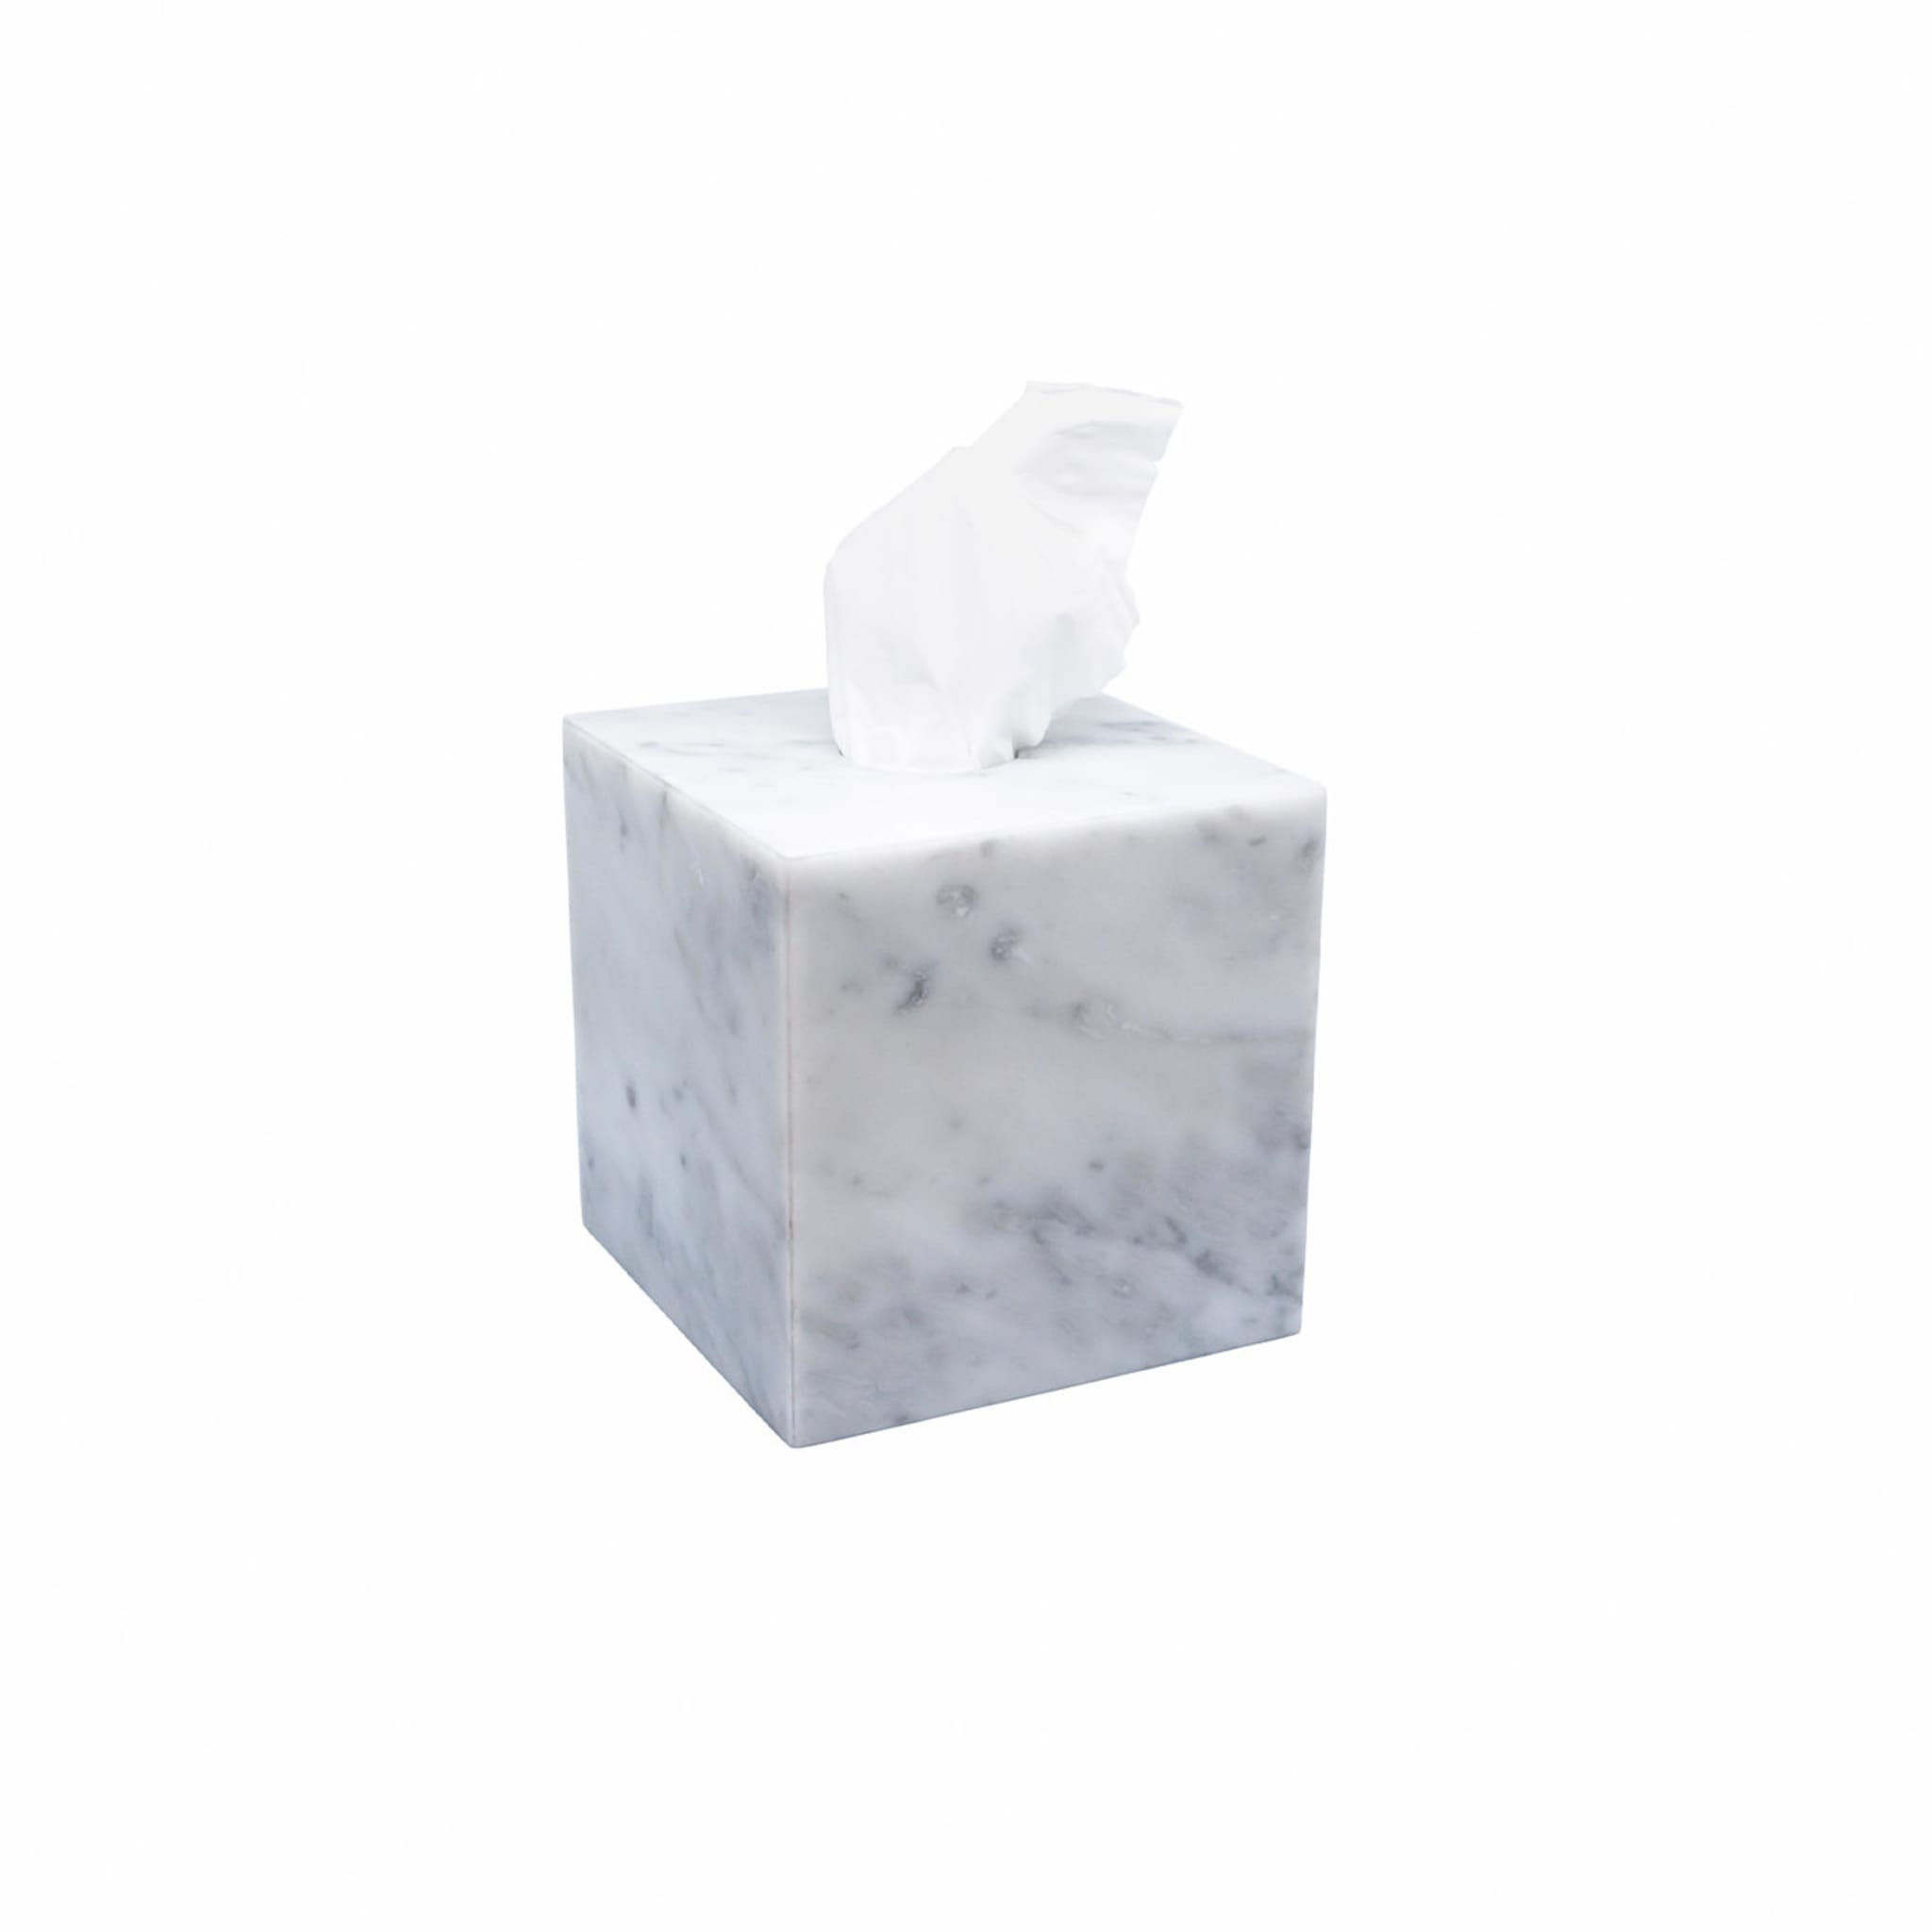 White Carrara Marble Tissue Box - Alternative view 1